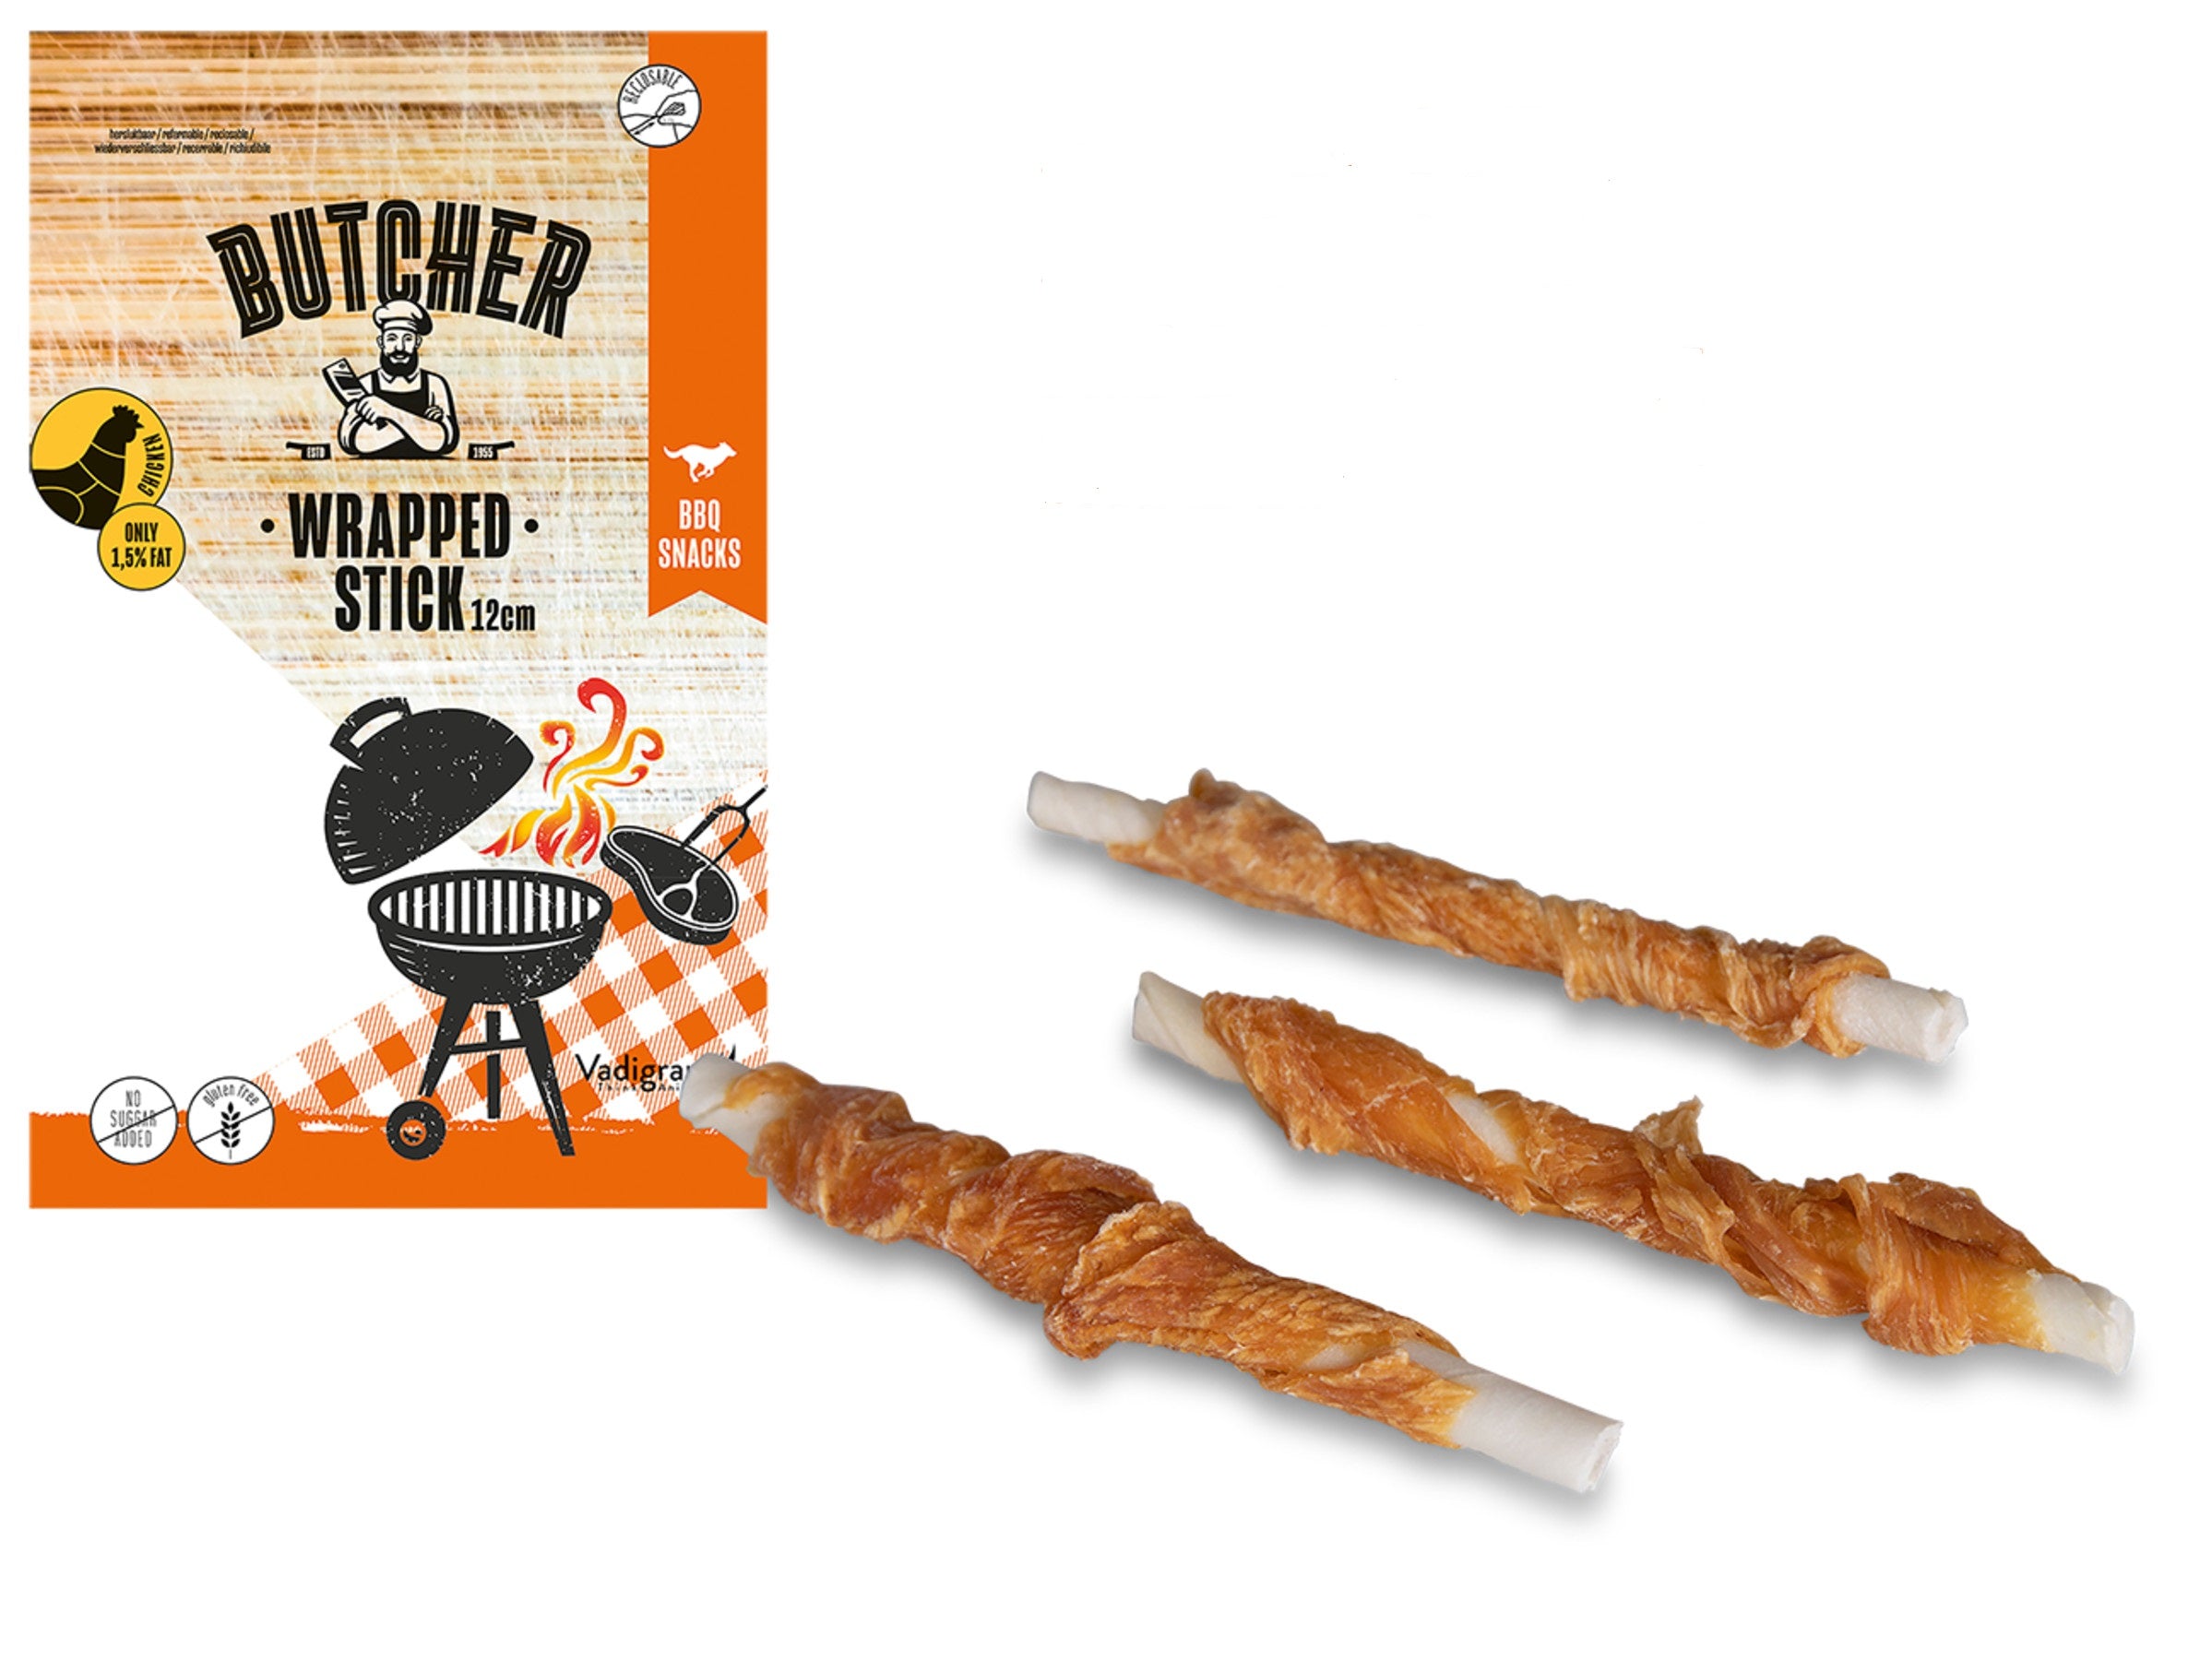 Chicken Wrapped stick 12 cm - Pip & Pepper by Dierenspeciaalzaak Huysmans